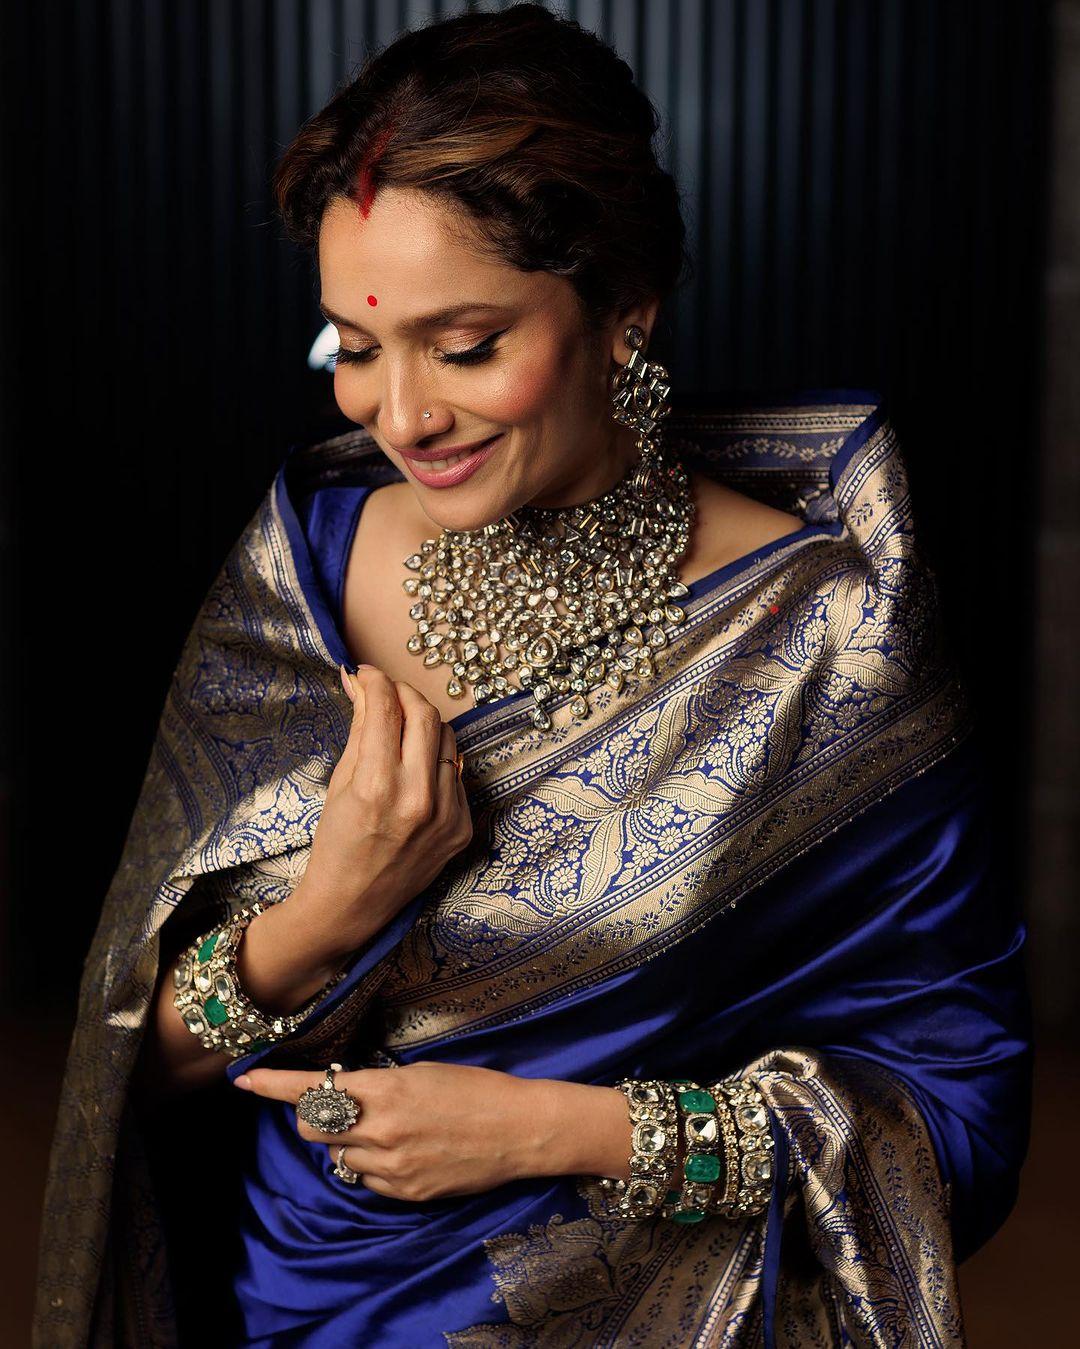 Ankita Lokhande sets saree fashion goals every day. Take a look: